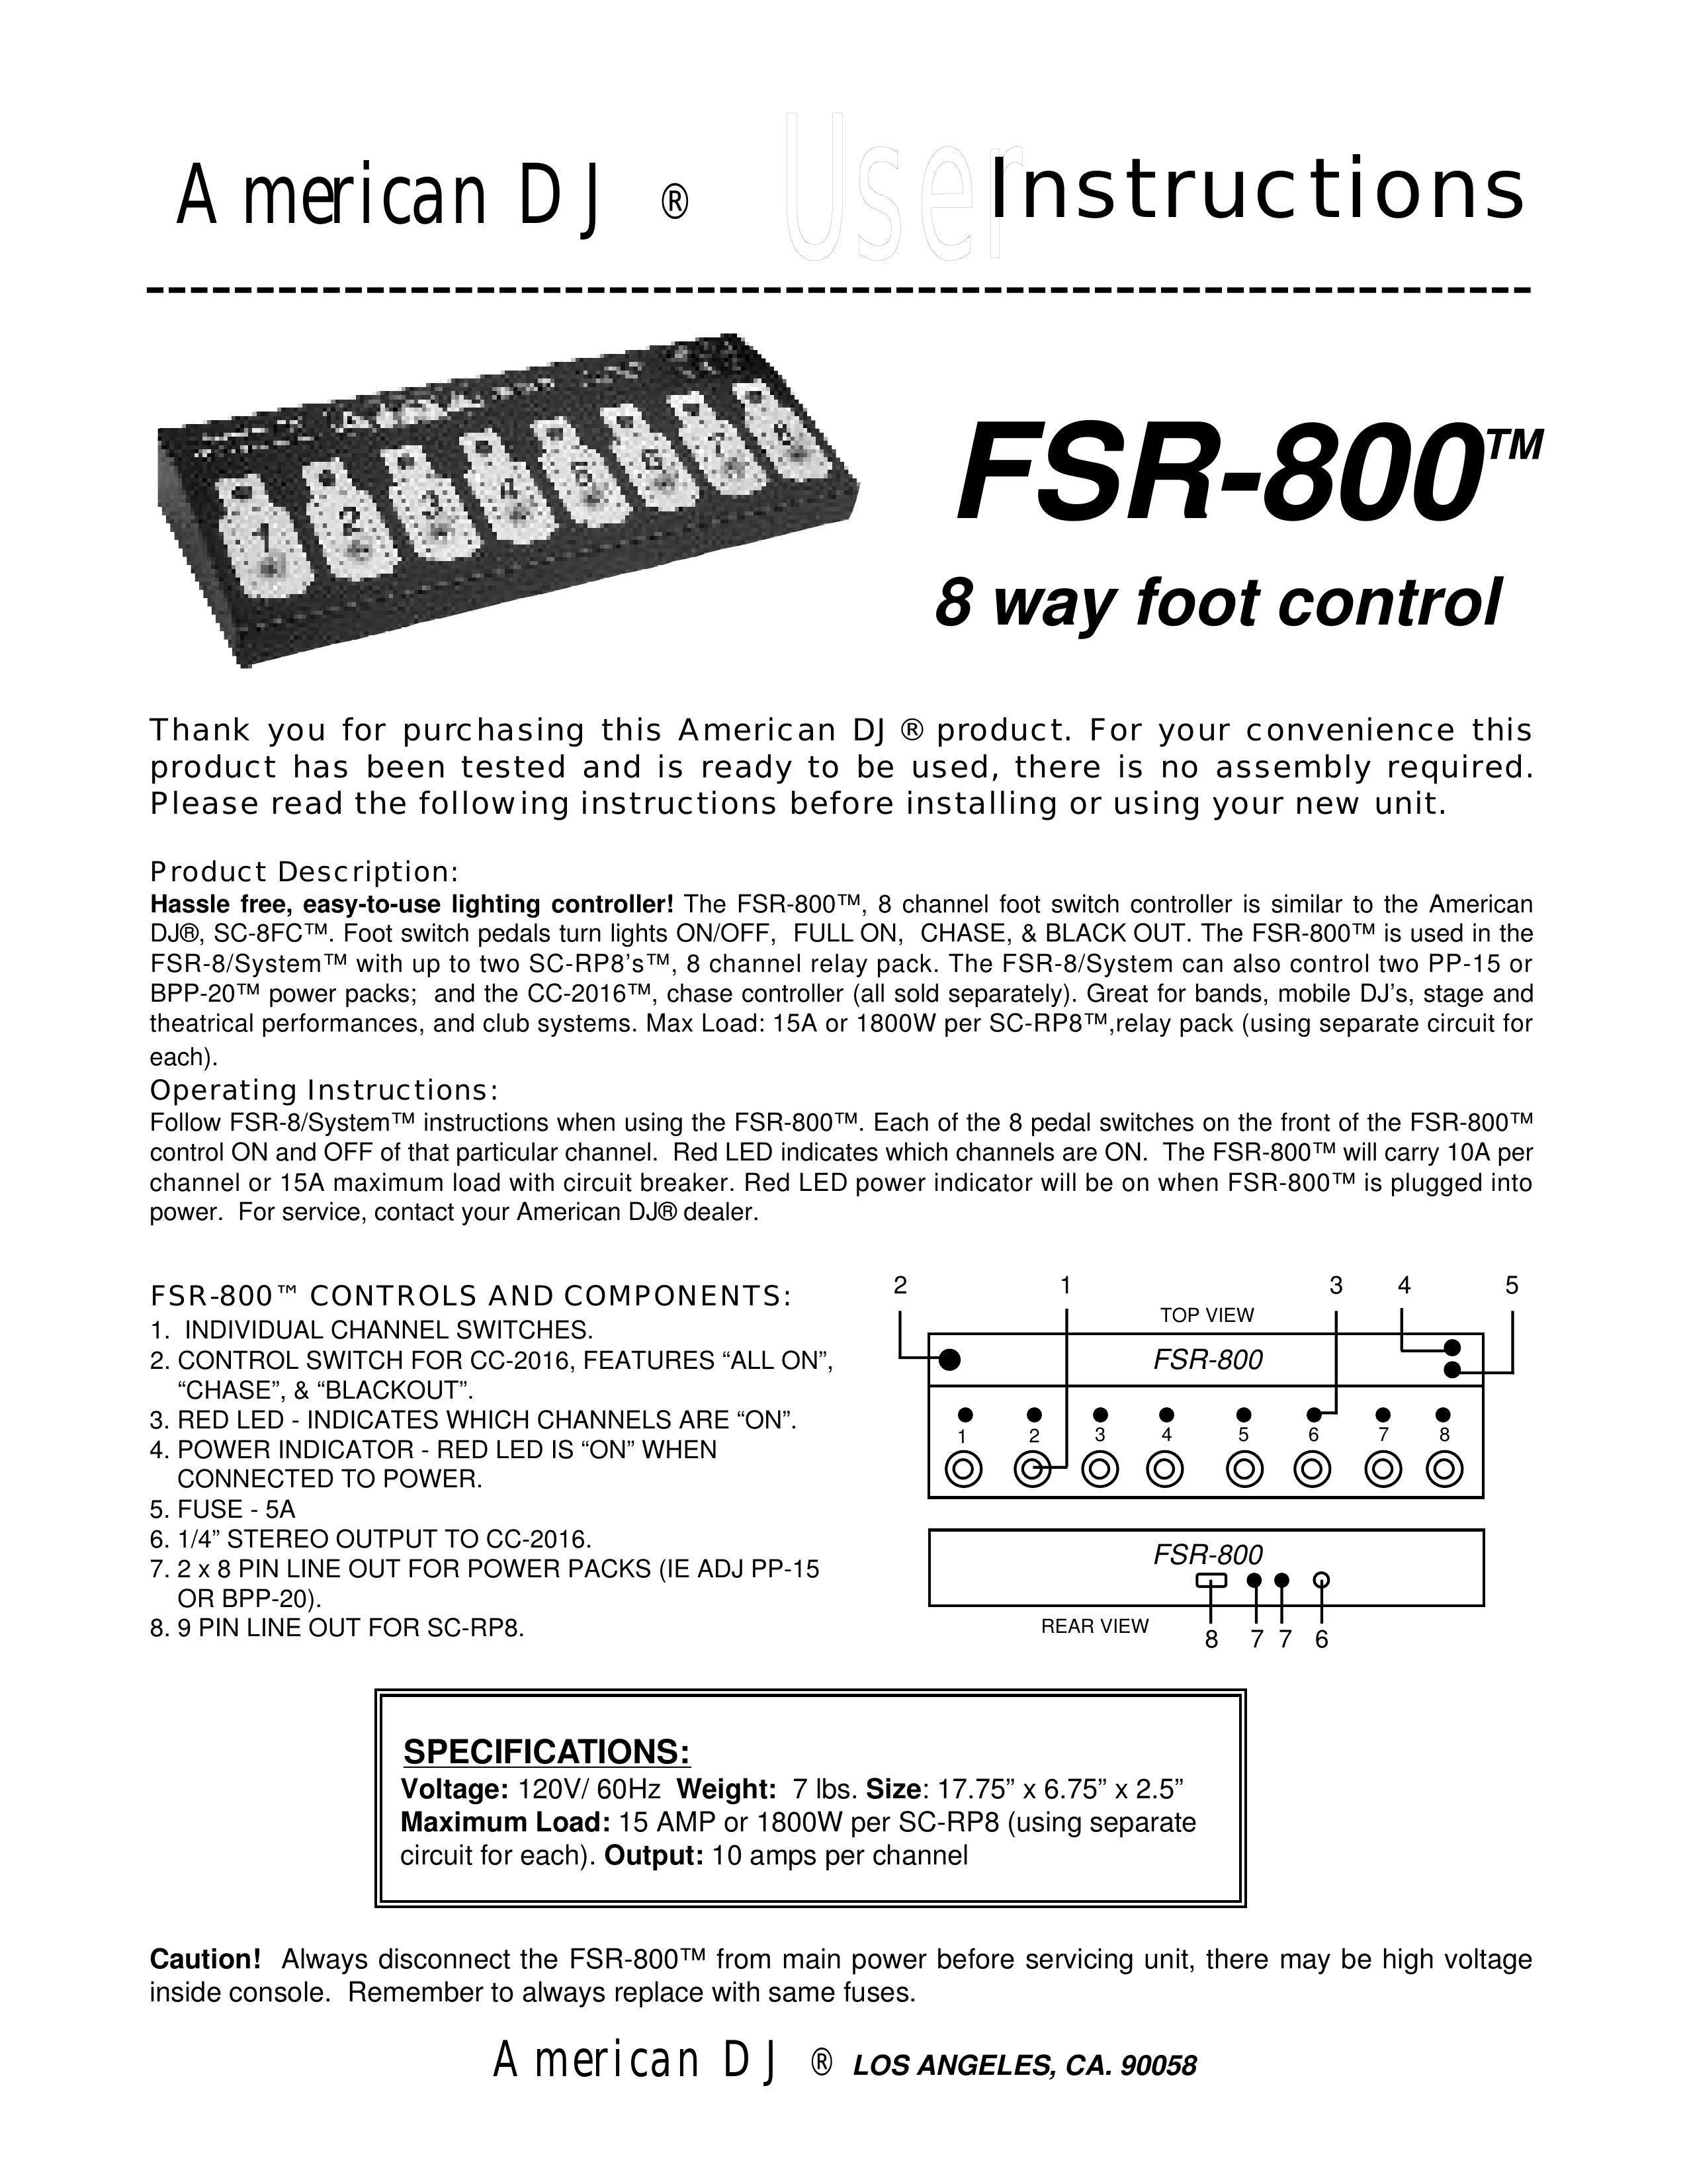 American DJ FSR-800 Music Pedal User Manual